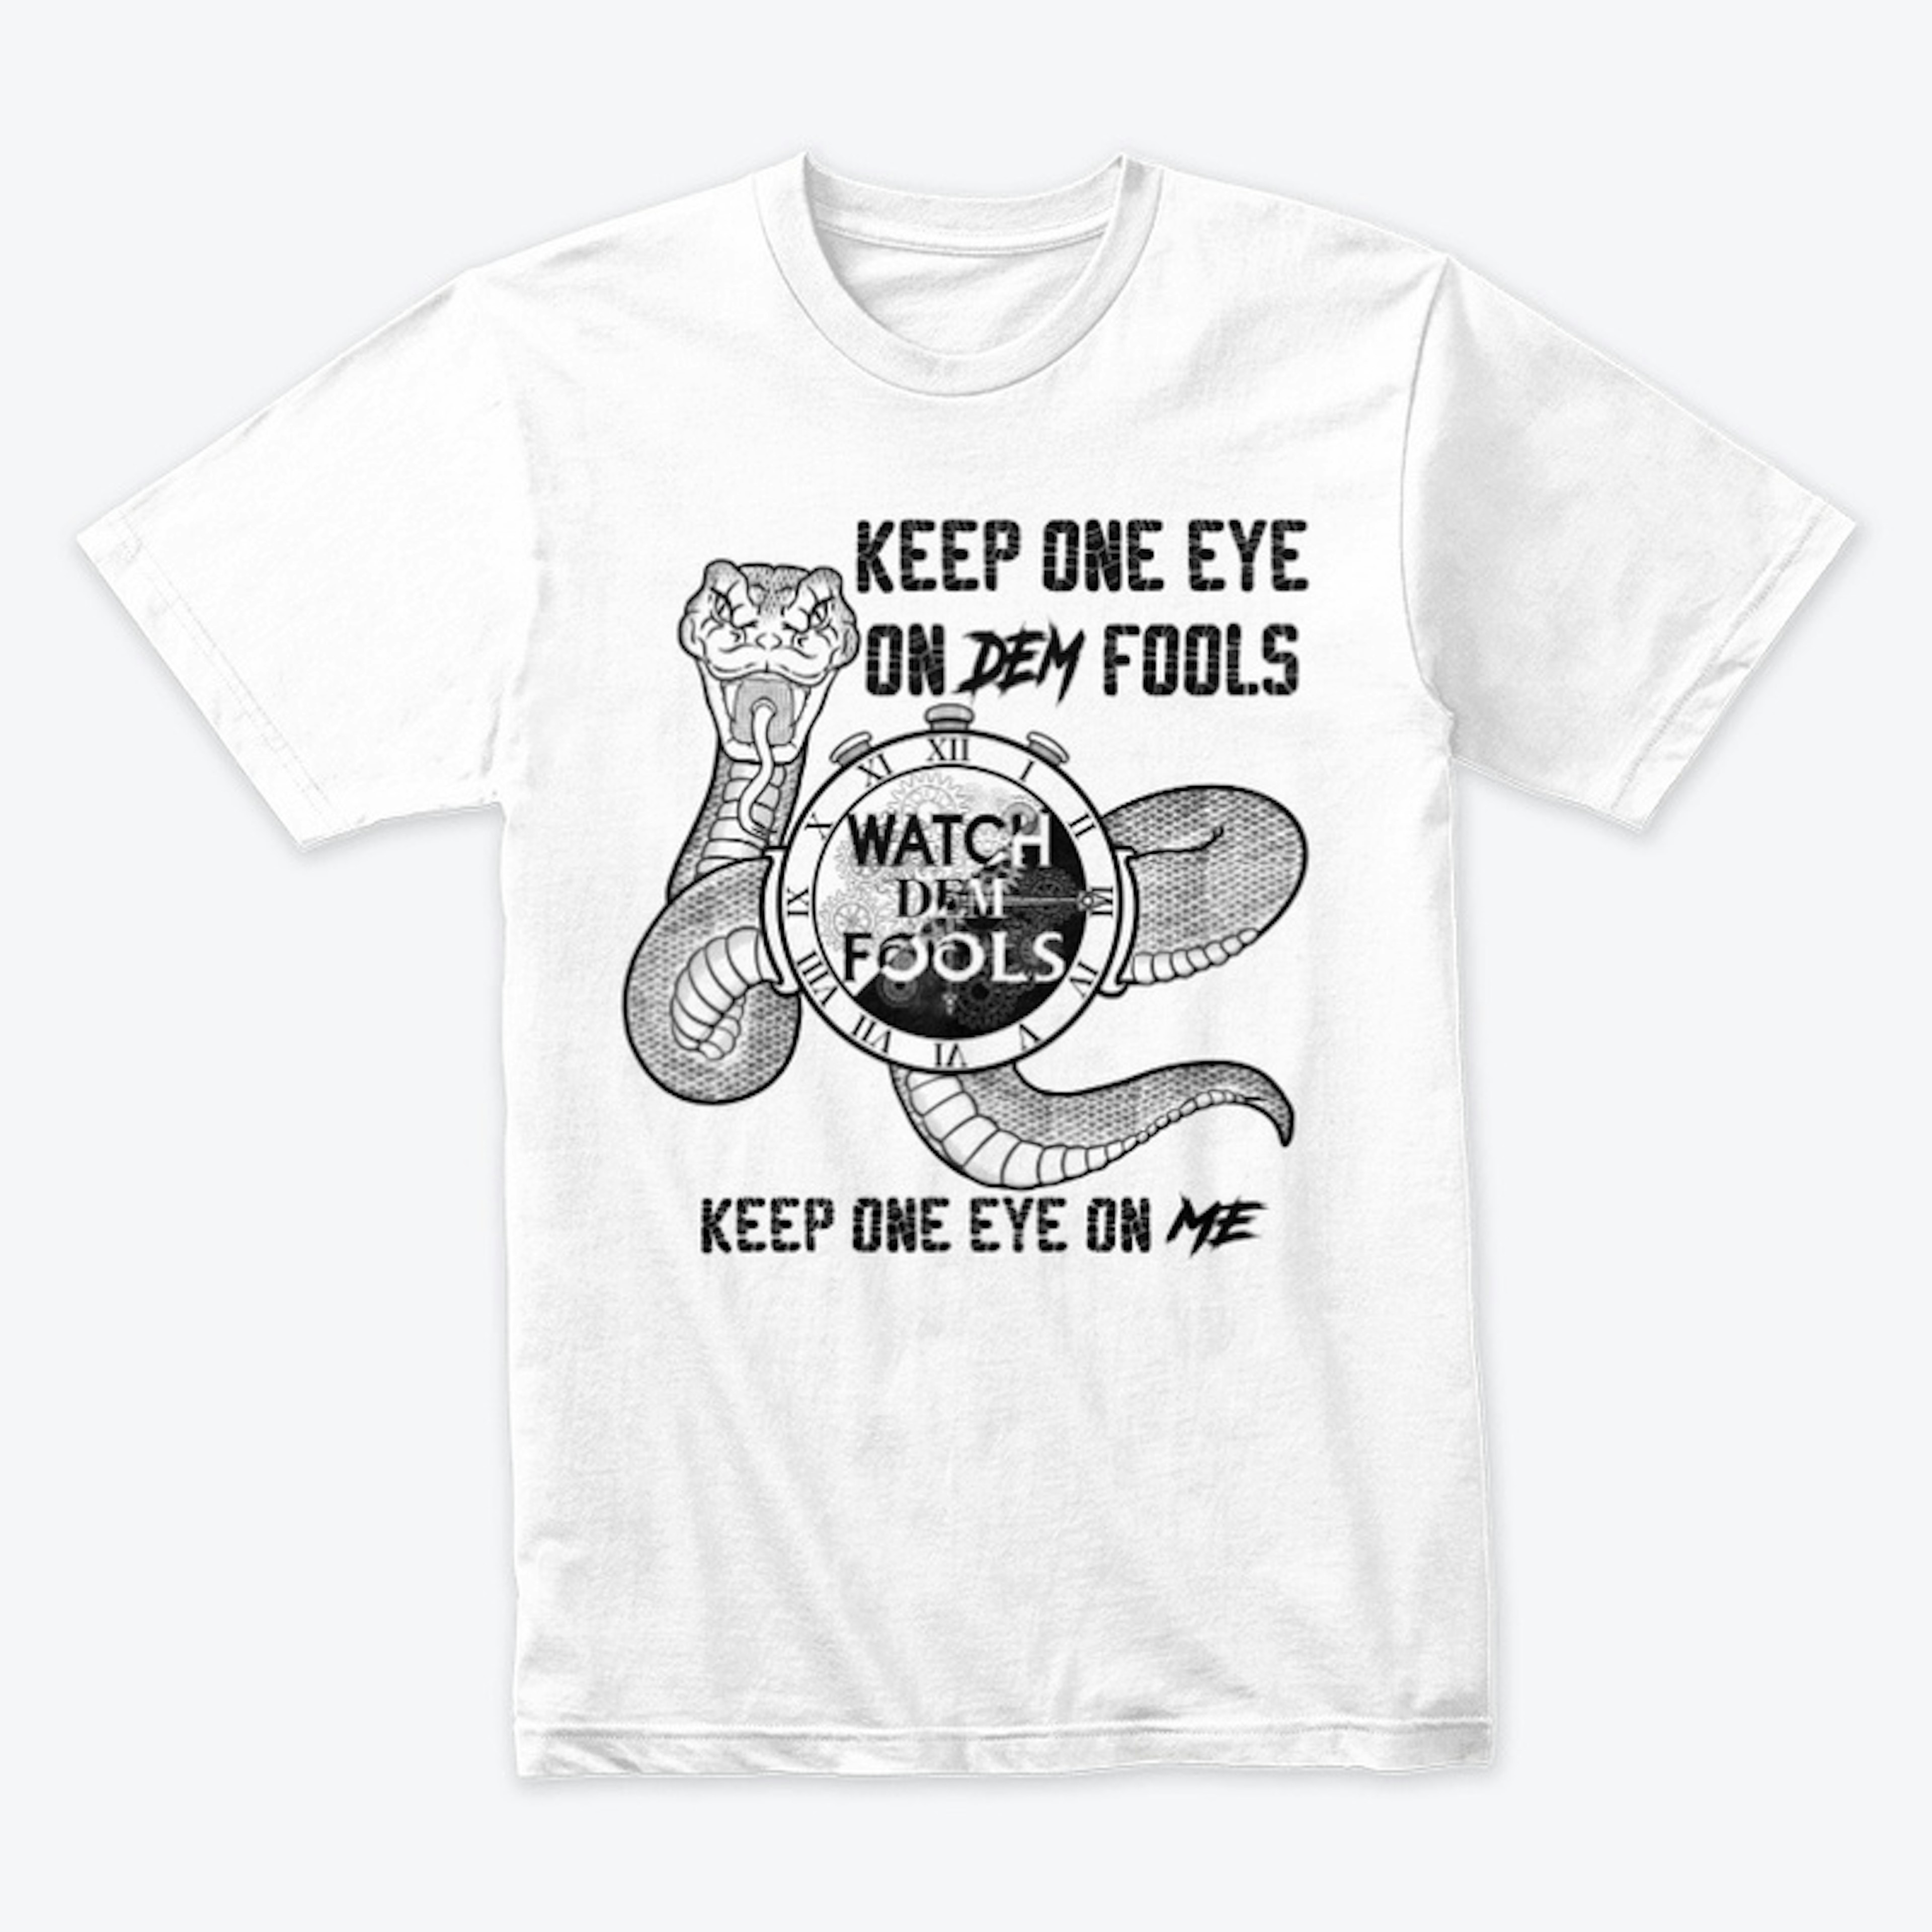 Keep One Eye On Dem Fools - White Tshirt